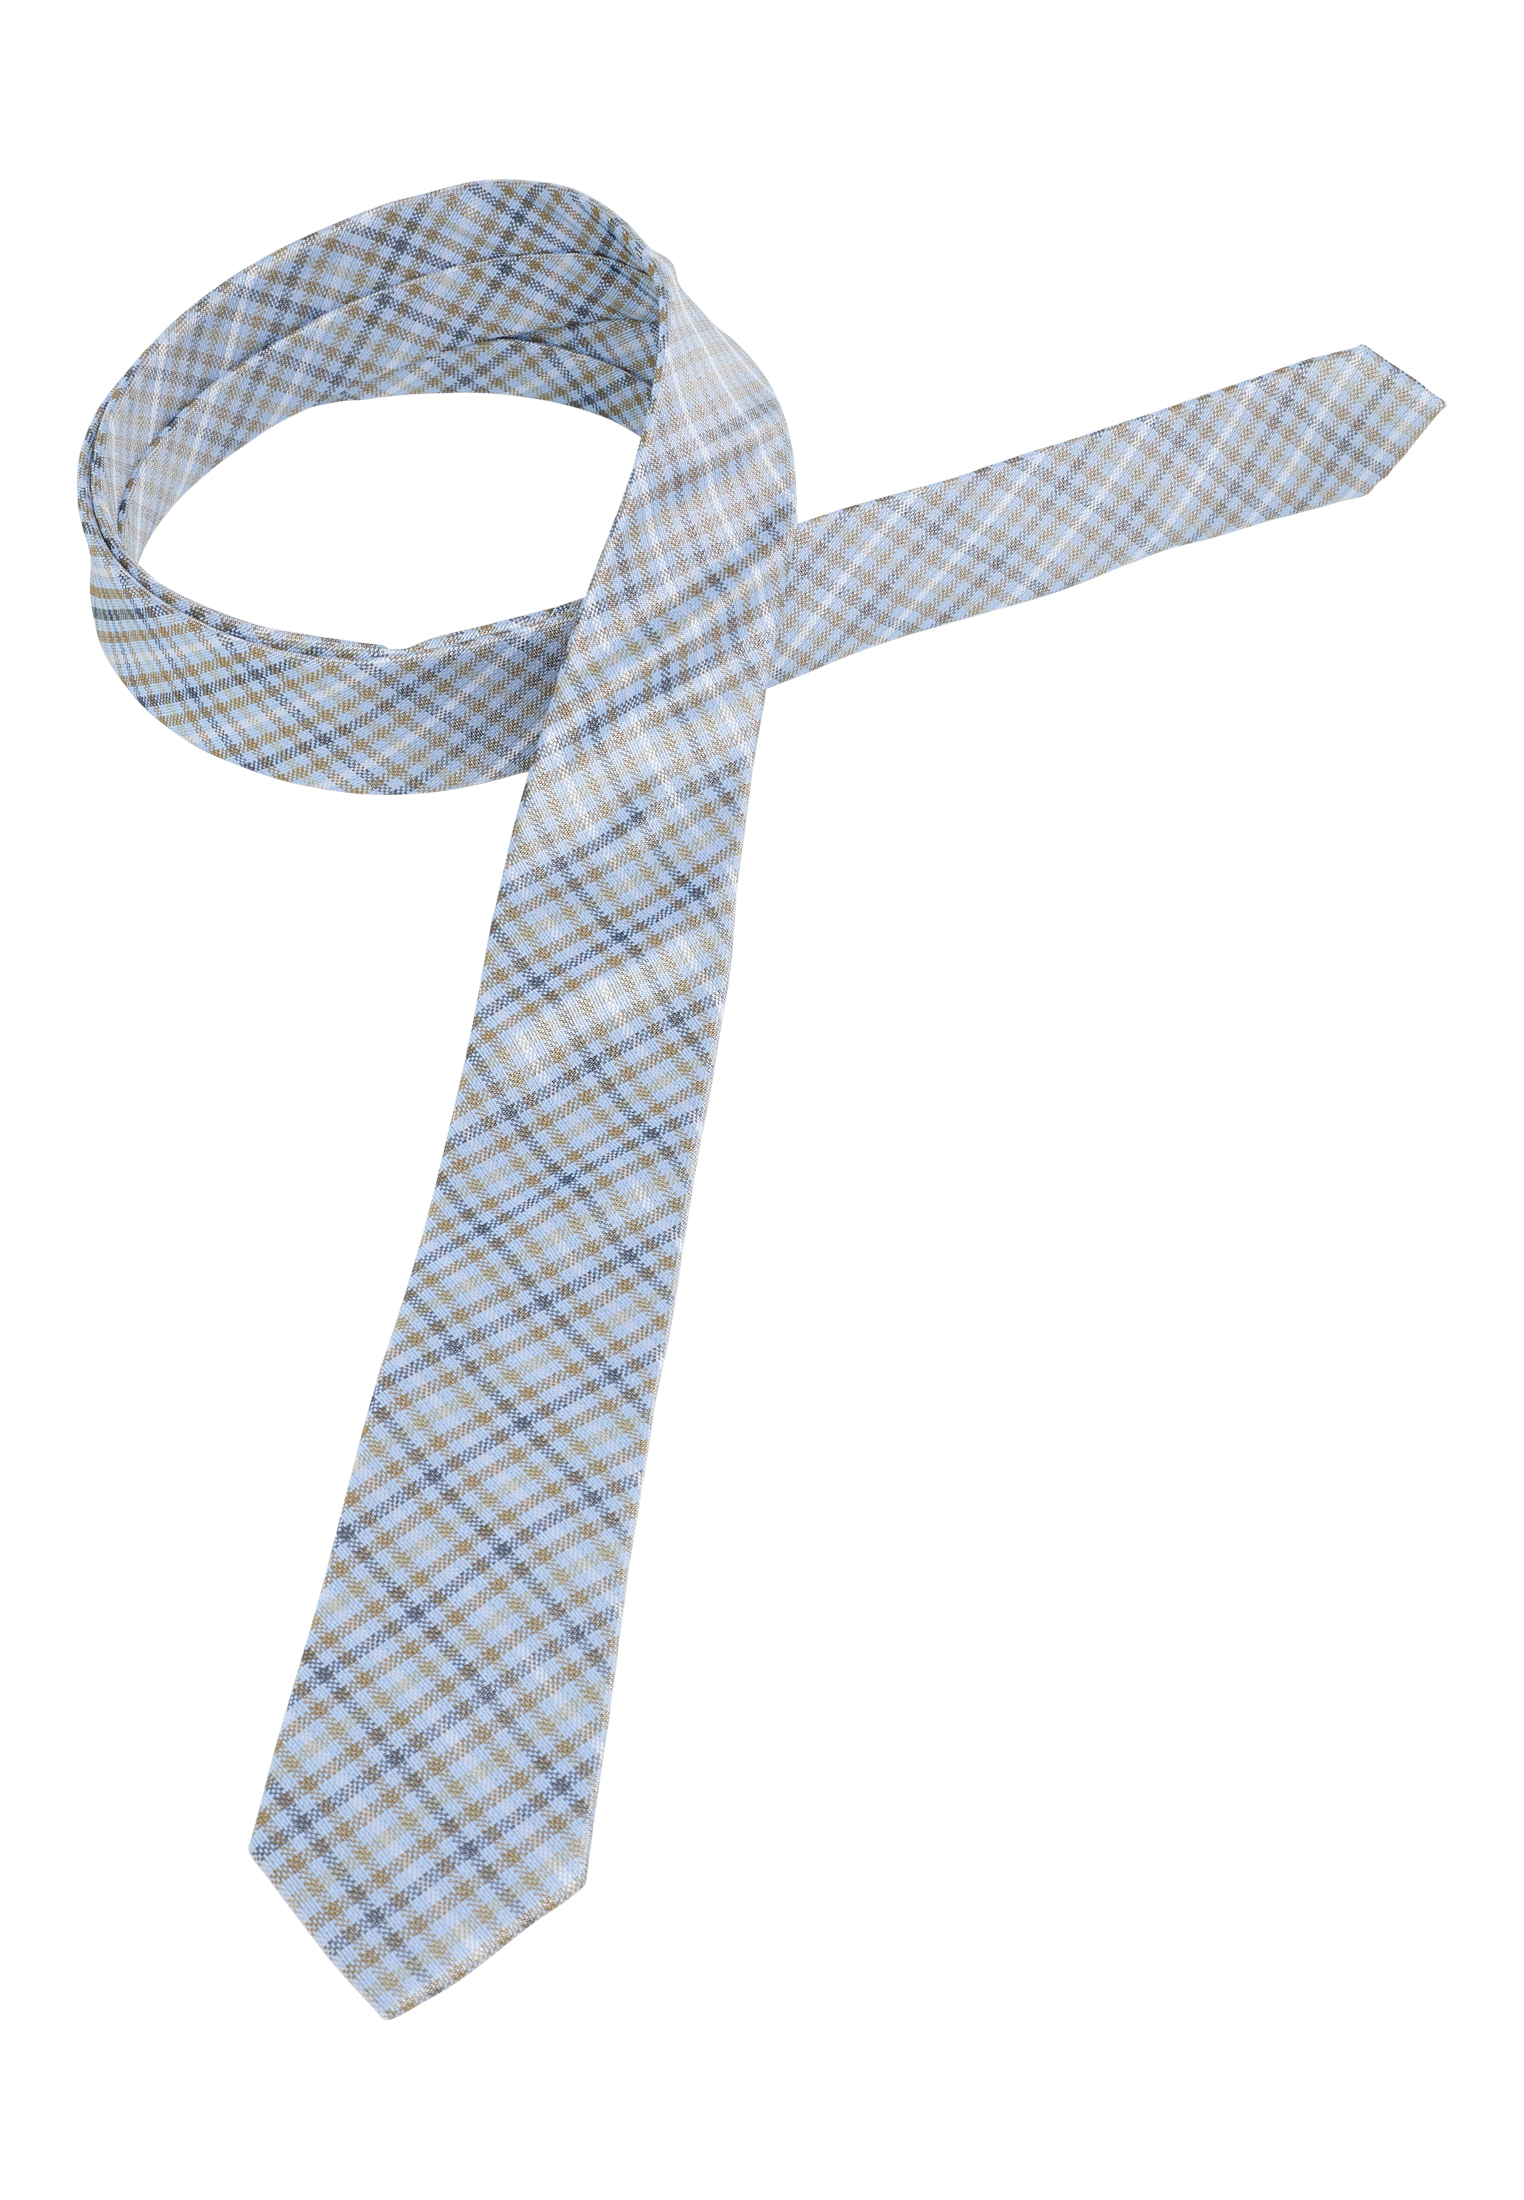 Cravate bleu/vert à carreaux